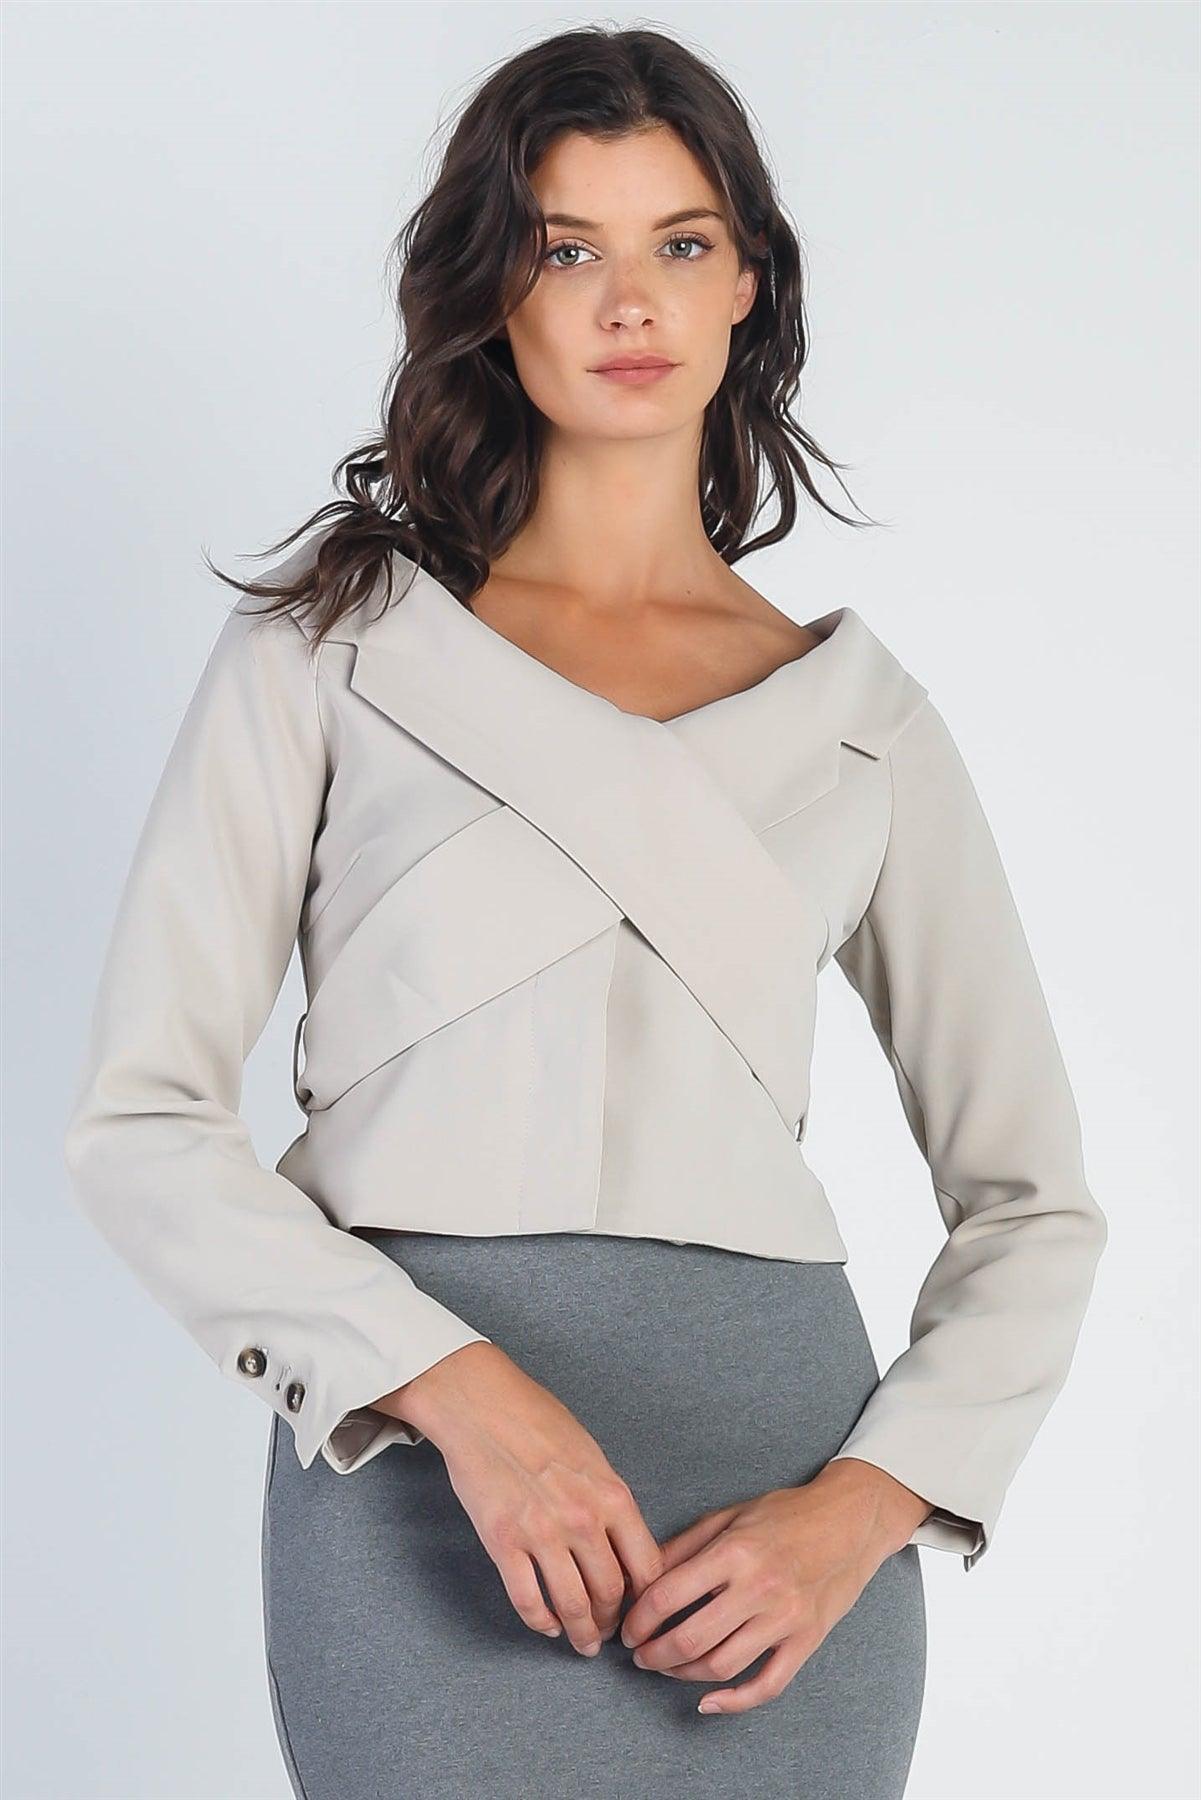 Grey Slim Fit Midi Length Skirt /2-2-2